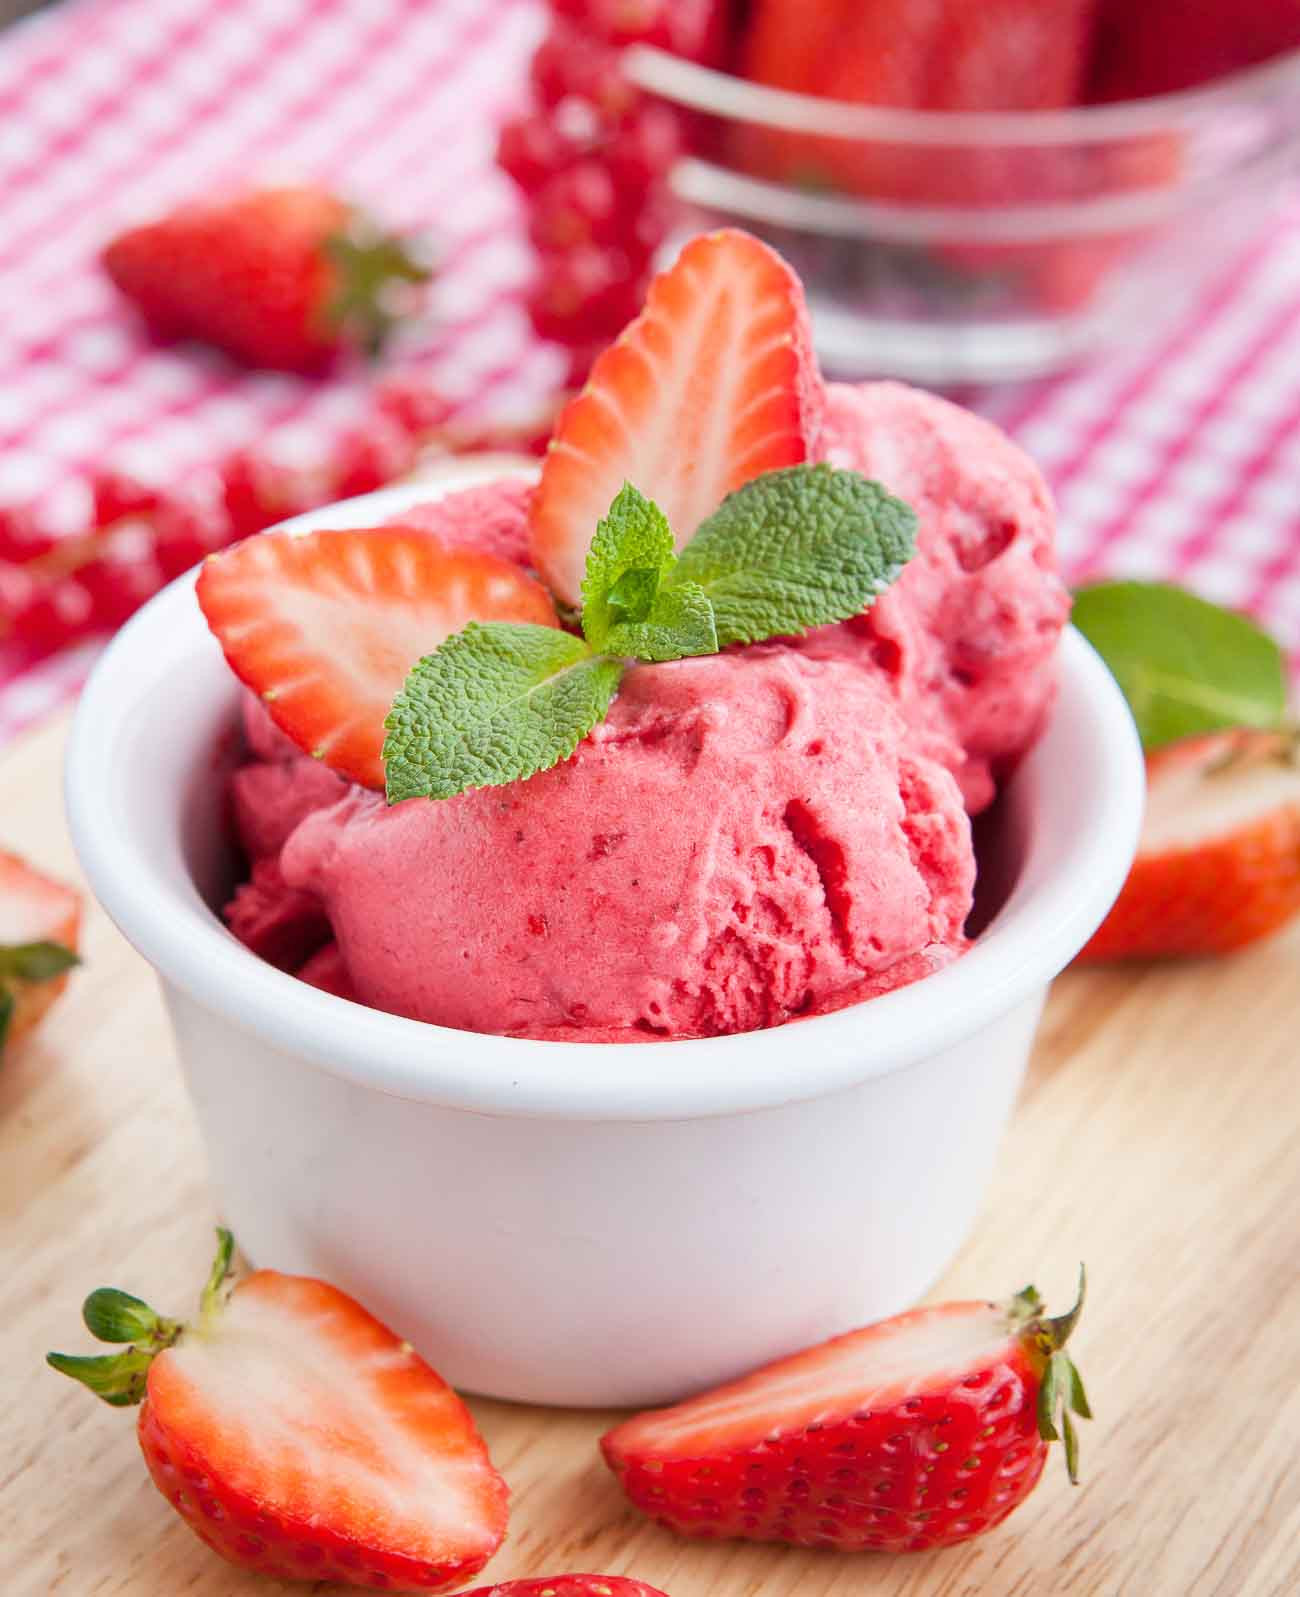 Best ideas about DIY Frozen Yogurt
. Save or Pin Homemade Low Fat Strawberry Frozen Yogurt Recipe by Now.